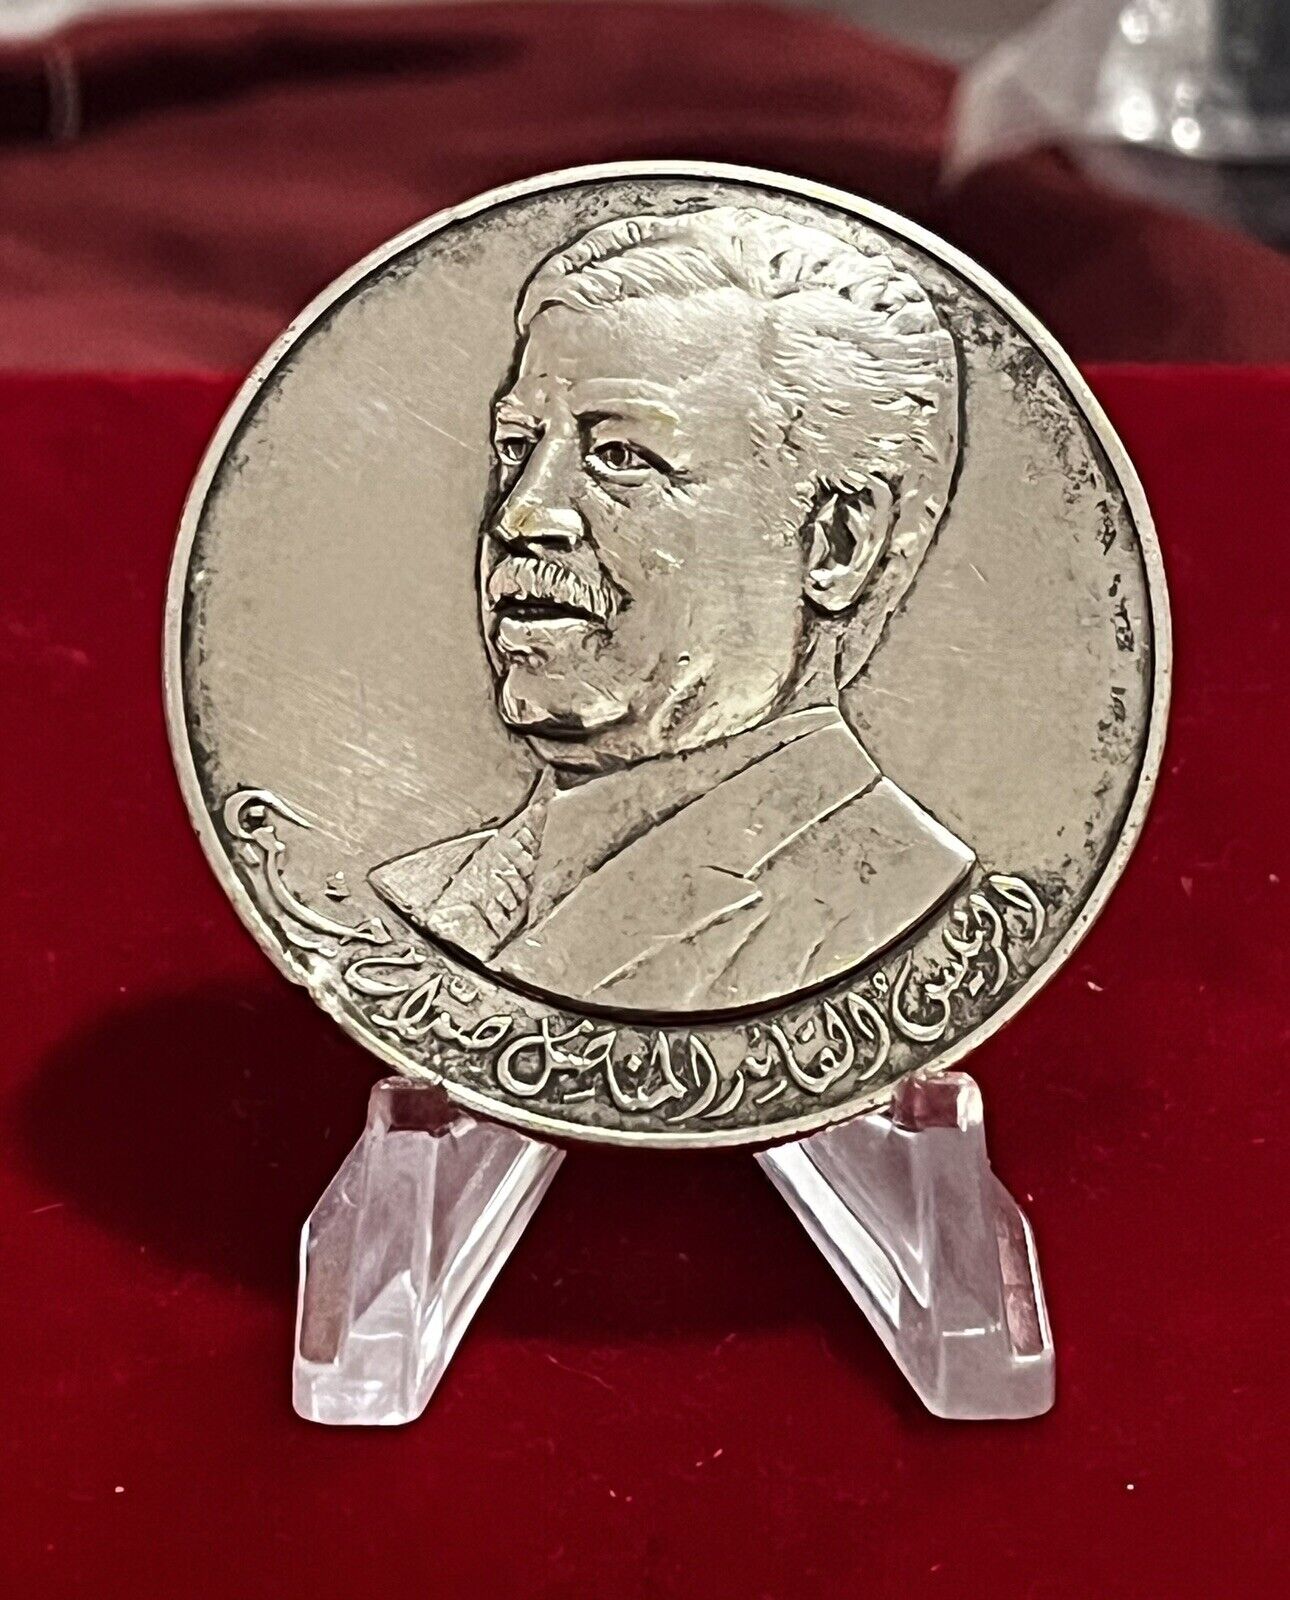 Iraq-vintage Iraqi Saddam Hussein Medallion for 17th July 1968 Revolution,1980’s